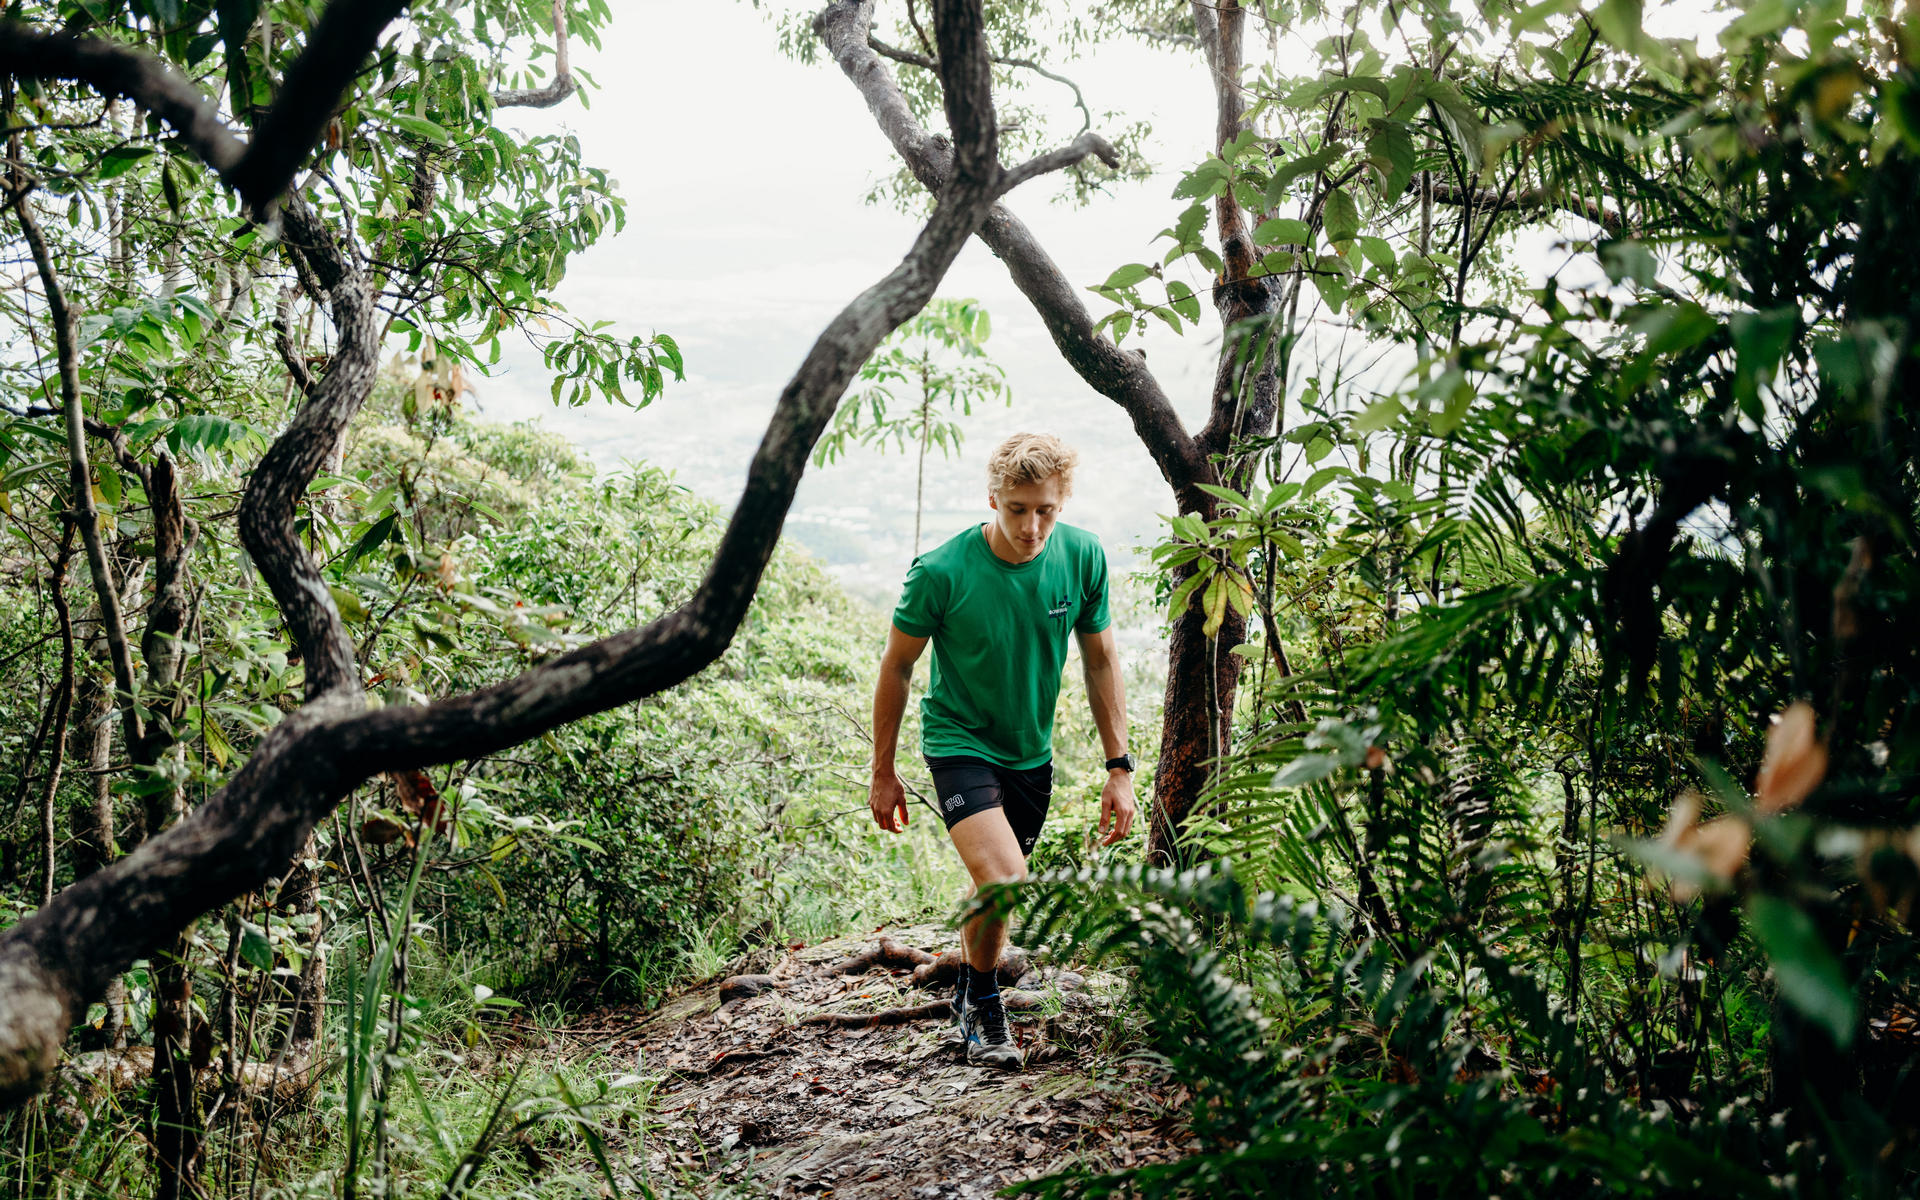 Man bushwalking in Cairns, framed by trees